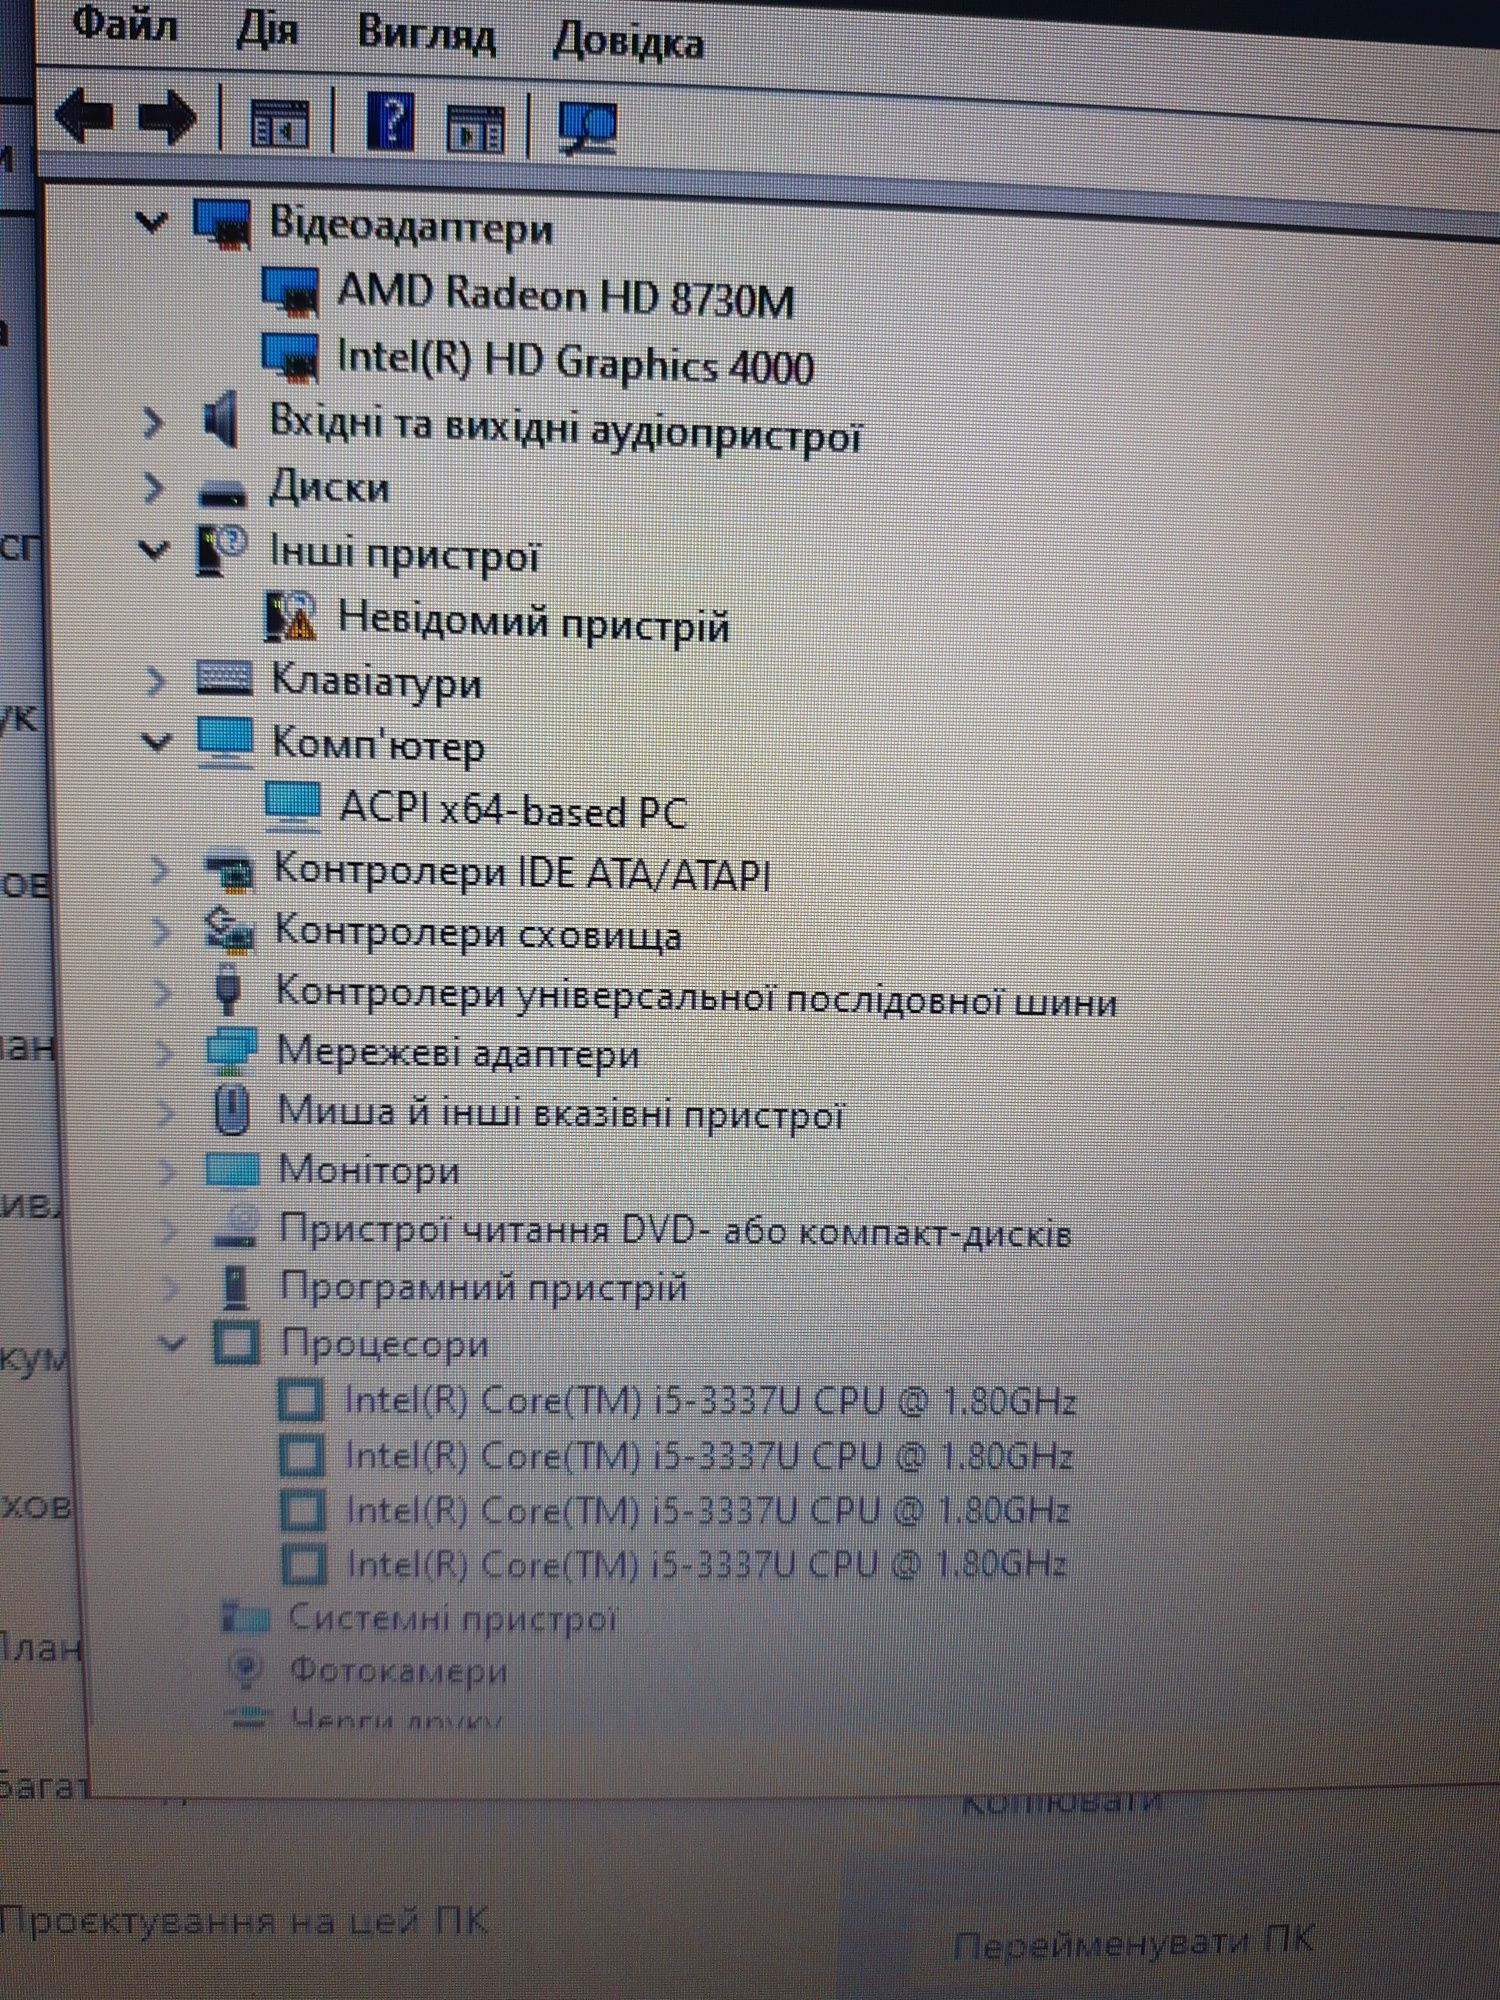 Dell Inspiron 15R 5521 i5, 8 RAM, AMD Radeon HD 8730M